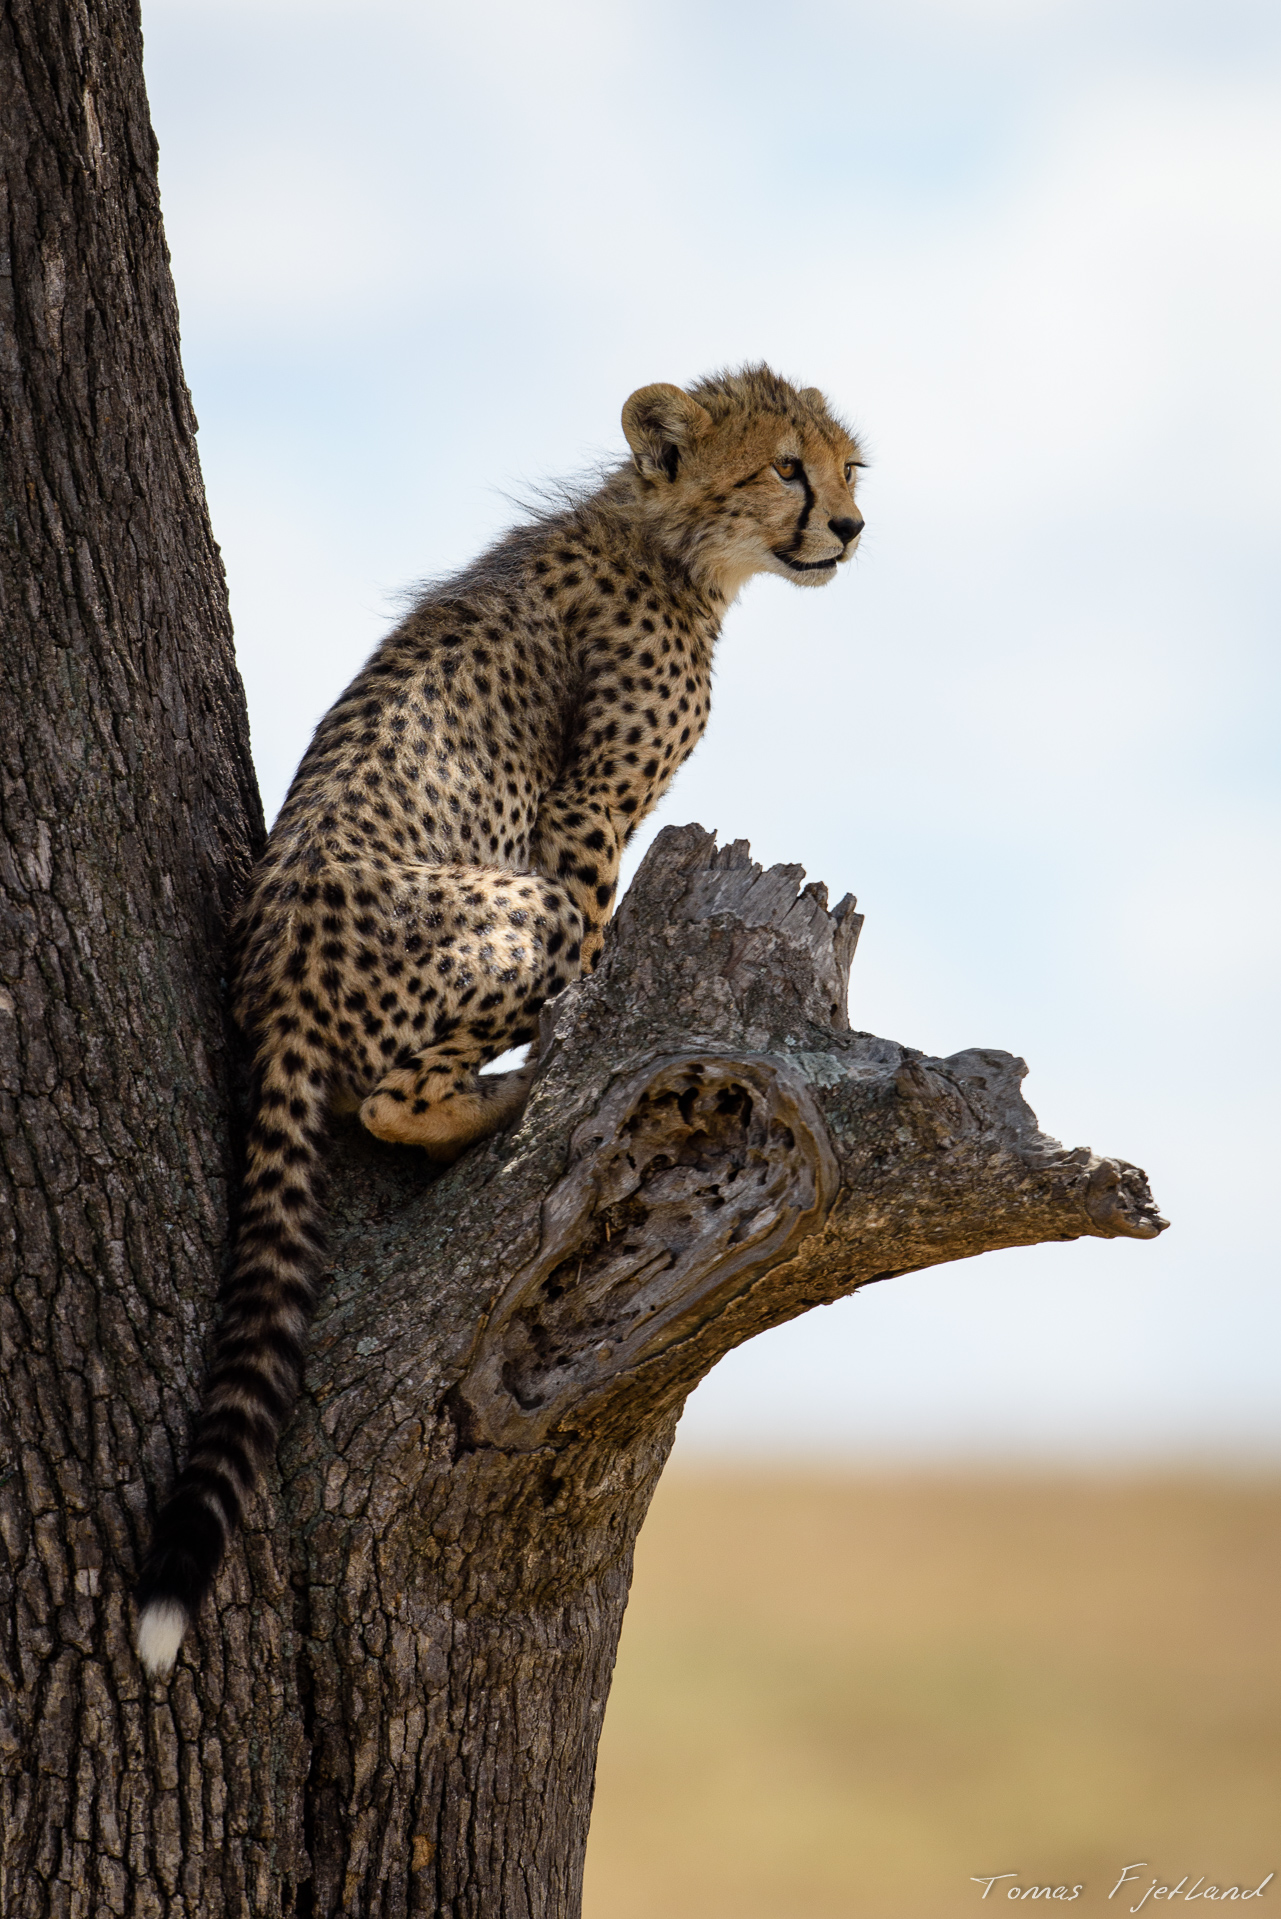 This cheetah cub is discovering why most cheetahs don't climb trees.